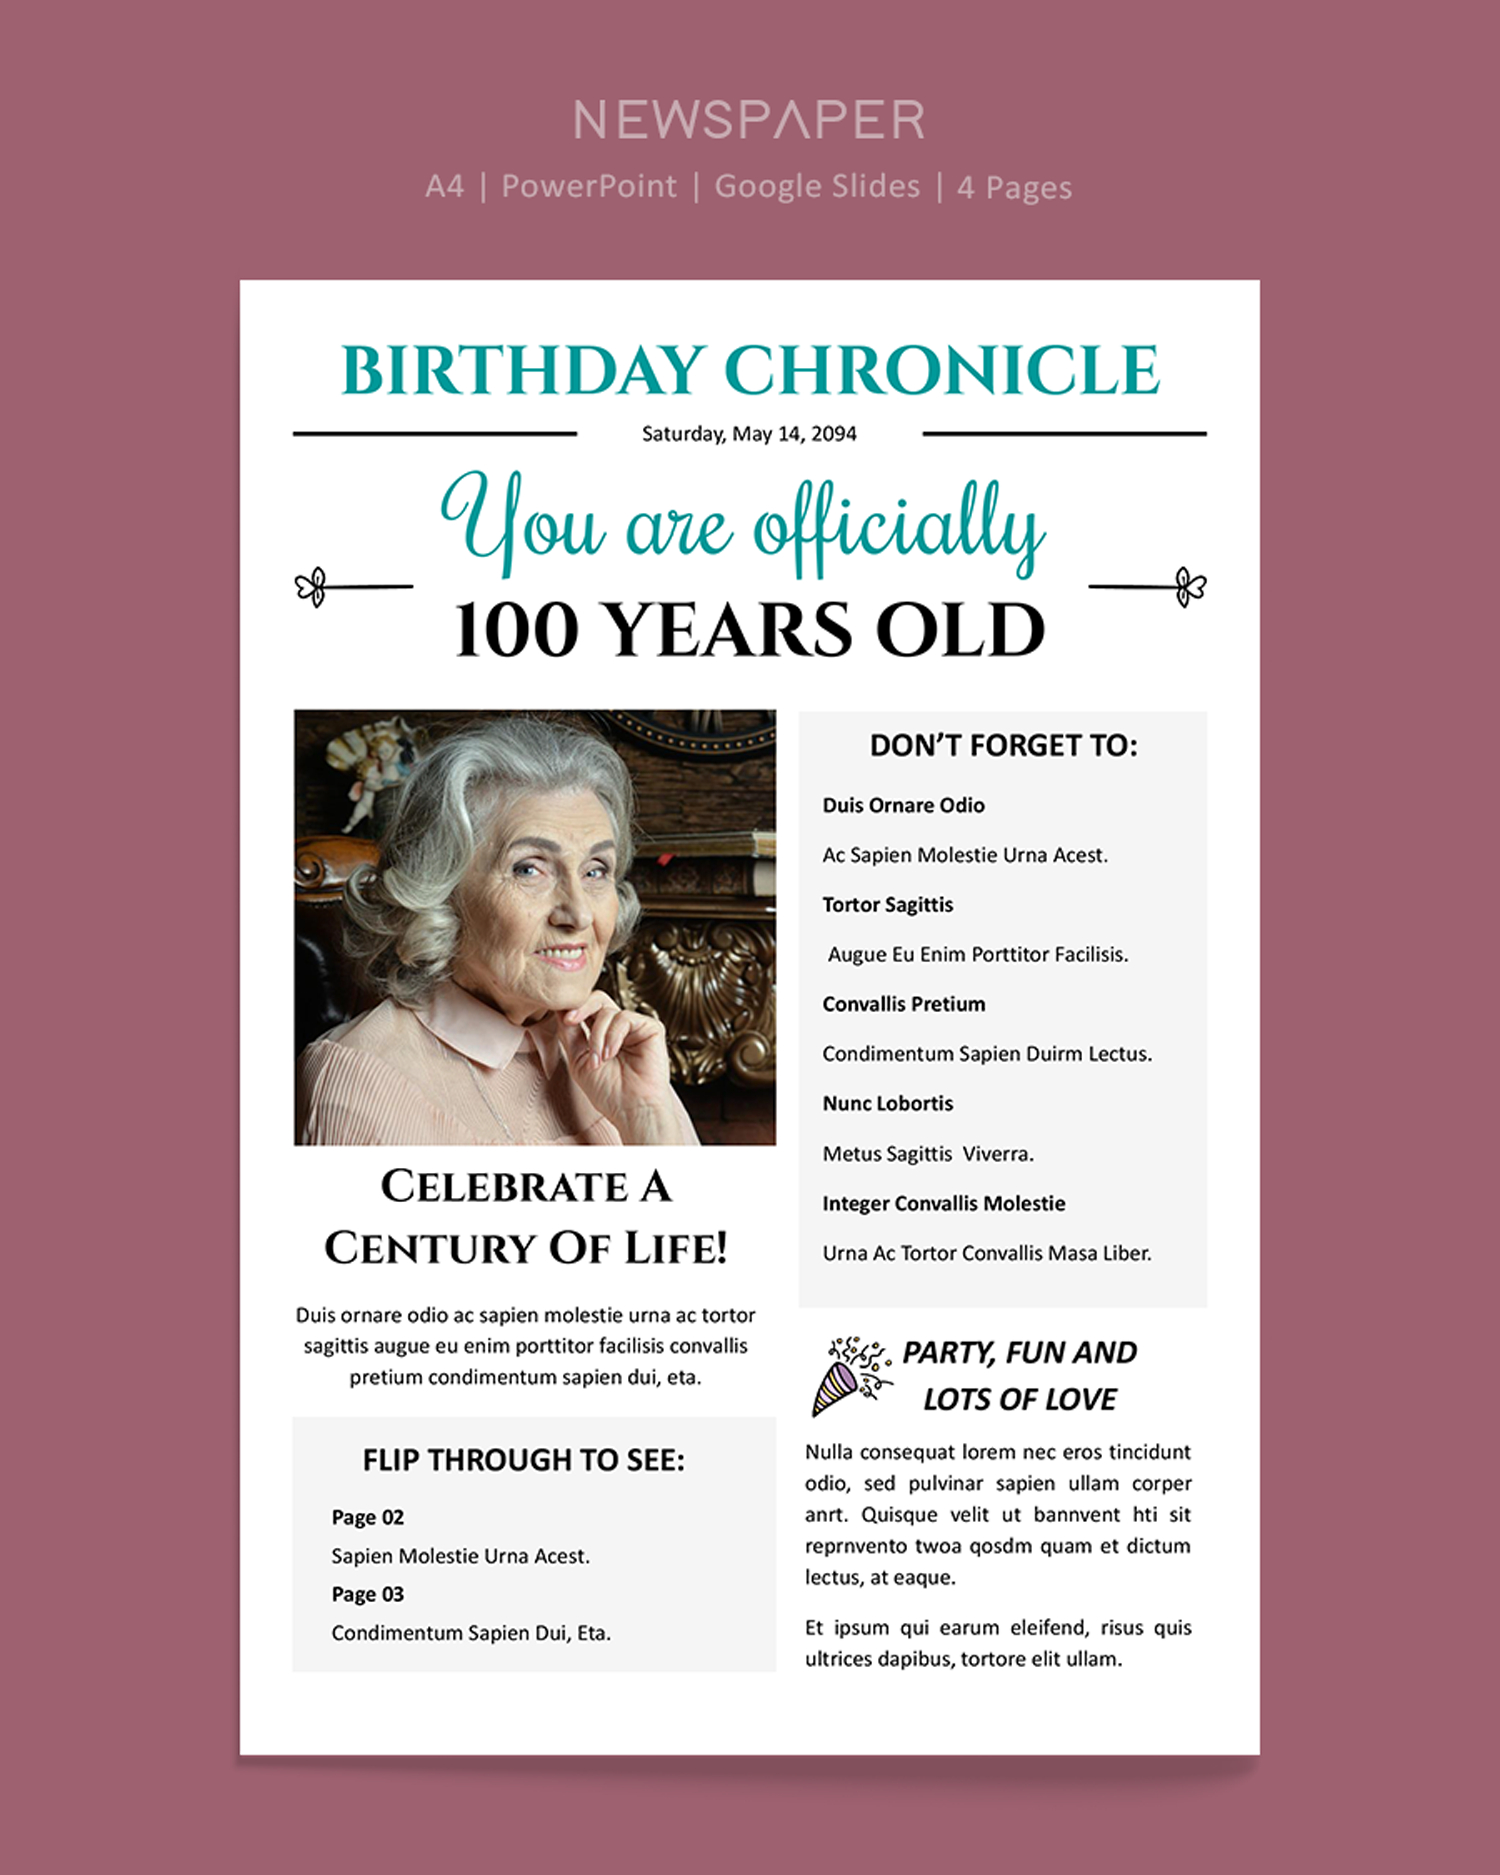 100th Birthday Newspaper Template - PowerPoint, Google Slides